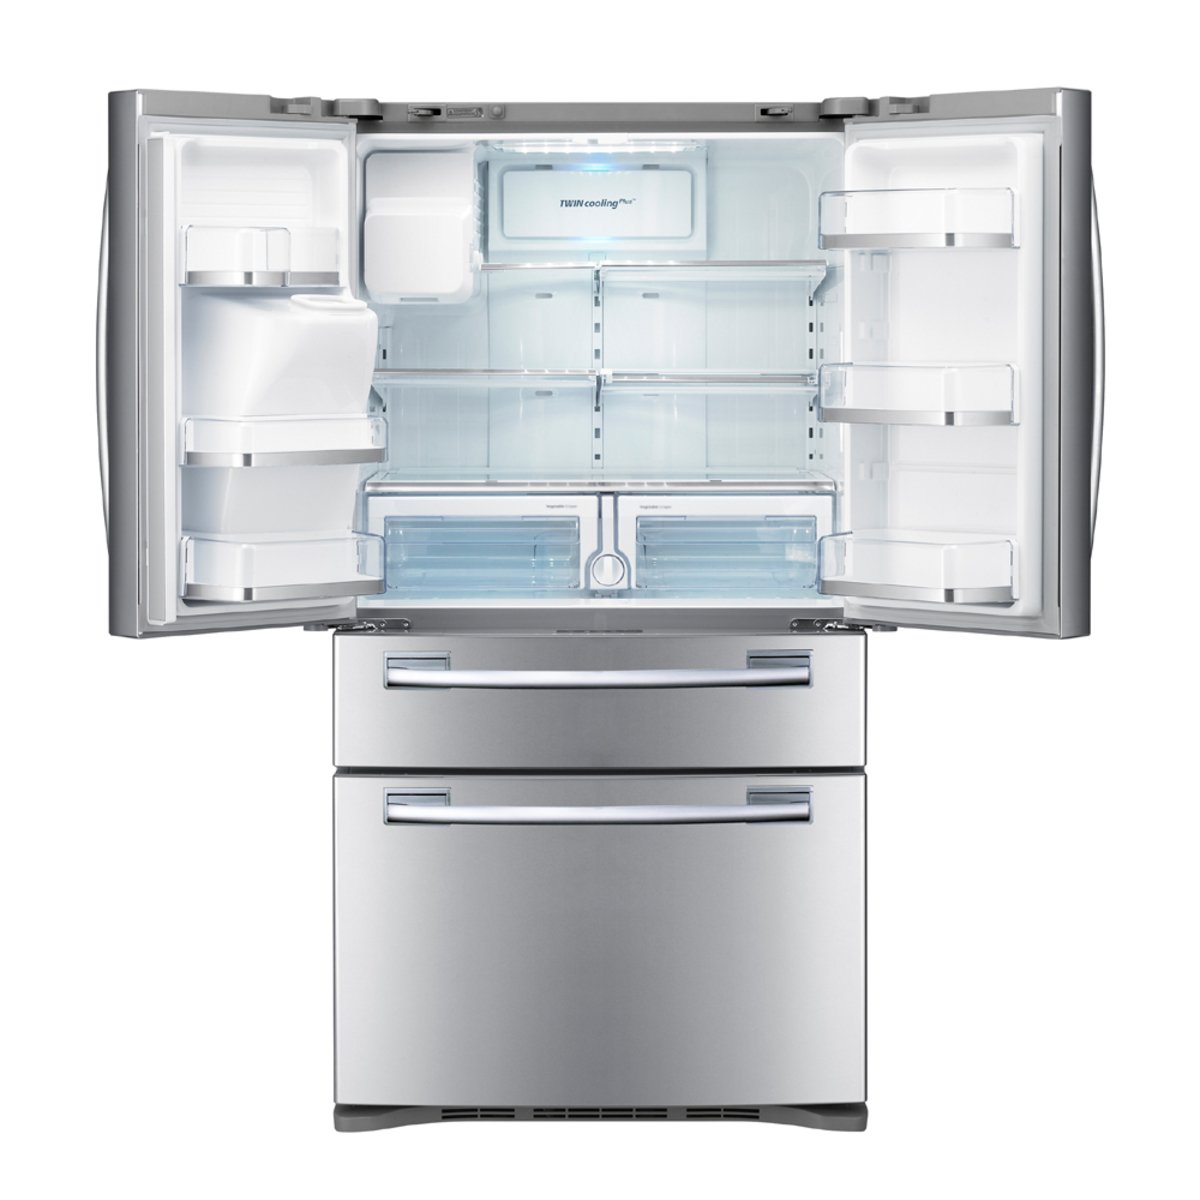 Samsung Side by Side Refrigerator RFG28MESL1 780 Ltr